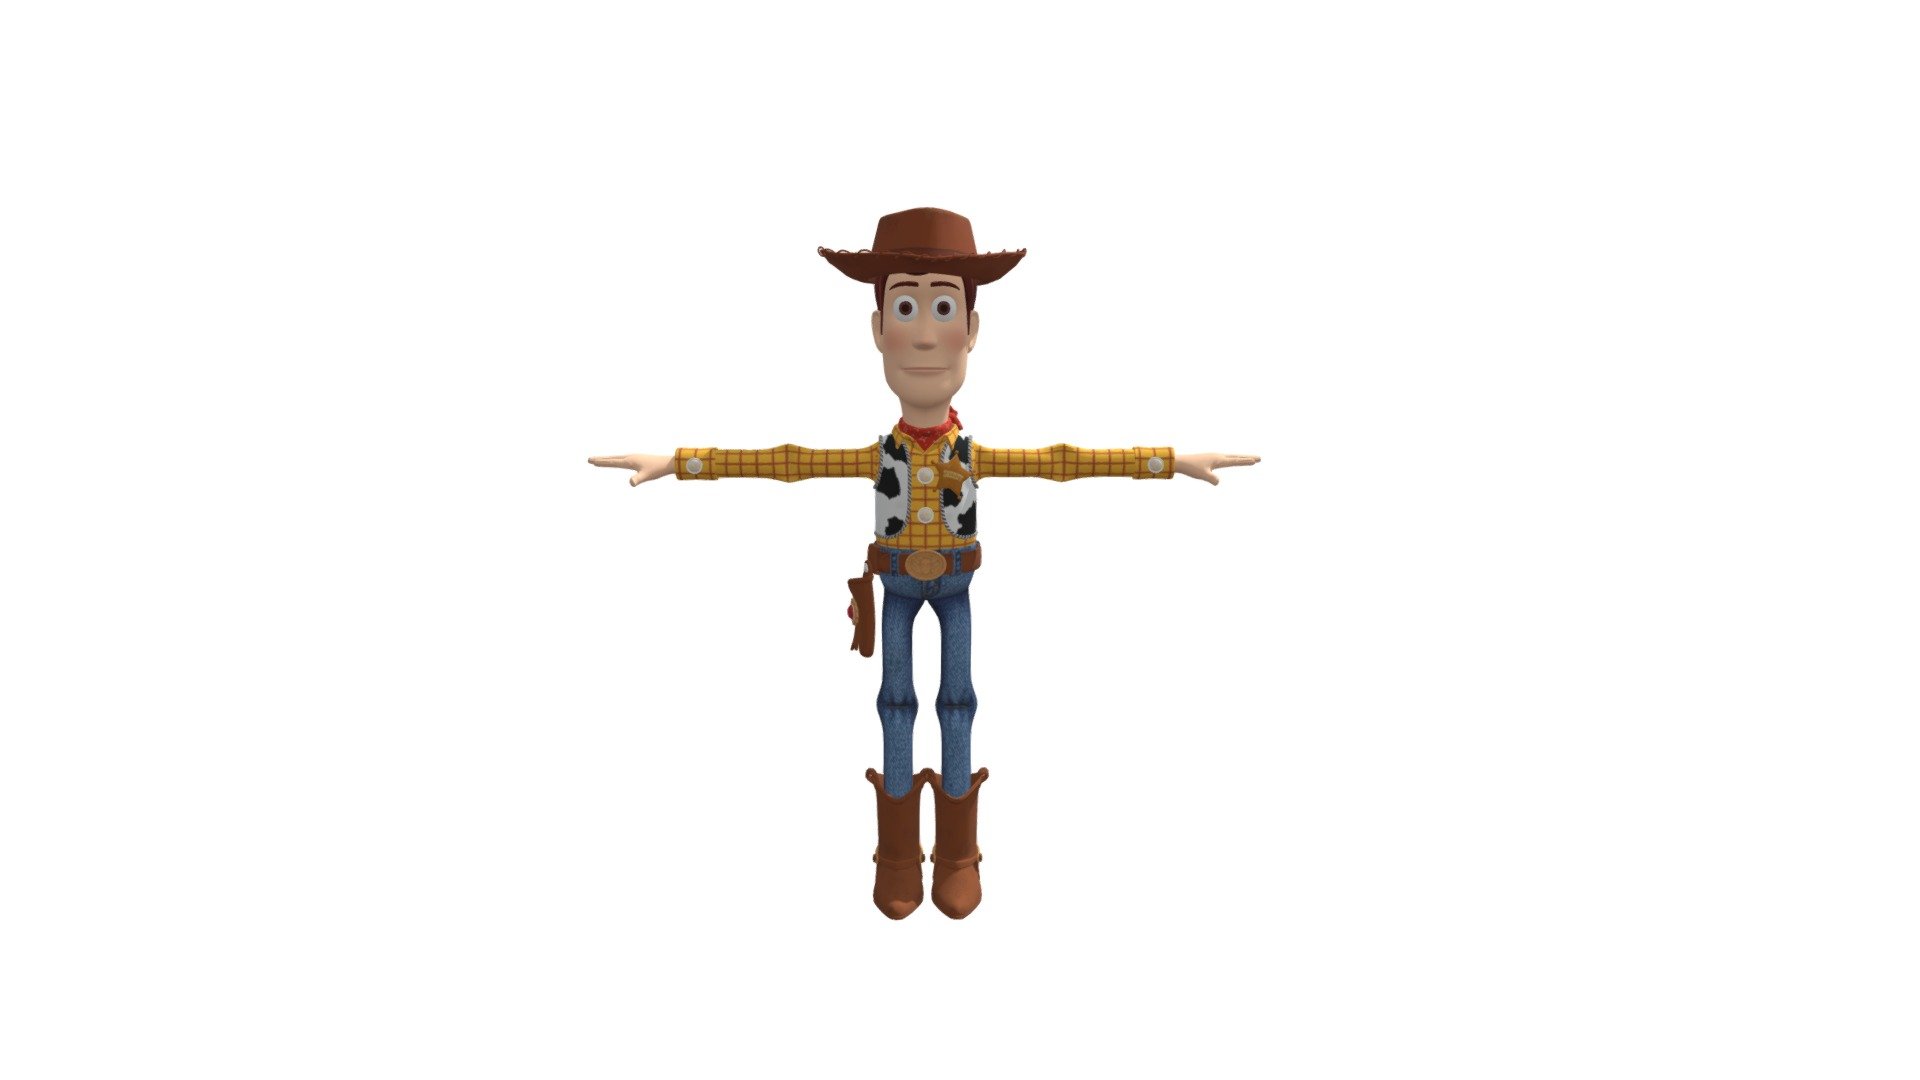 ya got a friend in me

Its Sherrif Woody

Free to take - Woody - Download Free 3D model by gaddiellartey2010 3d model